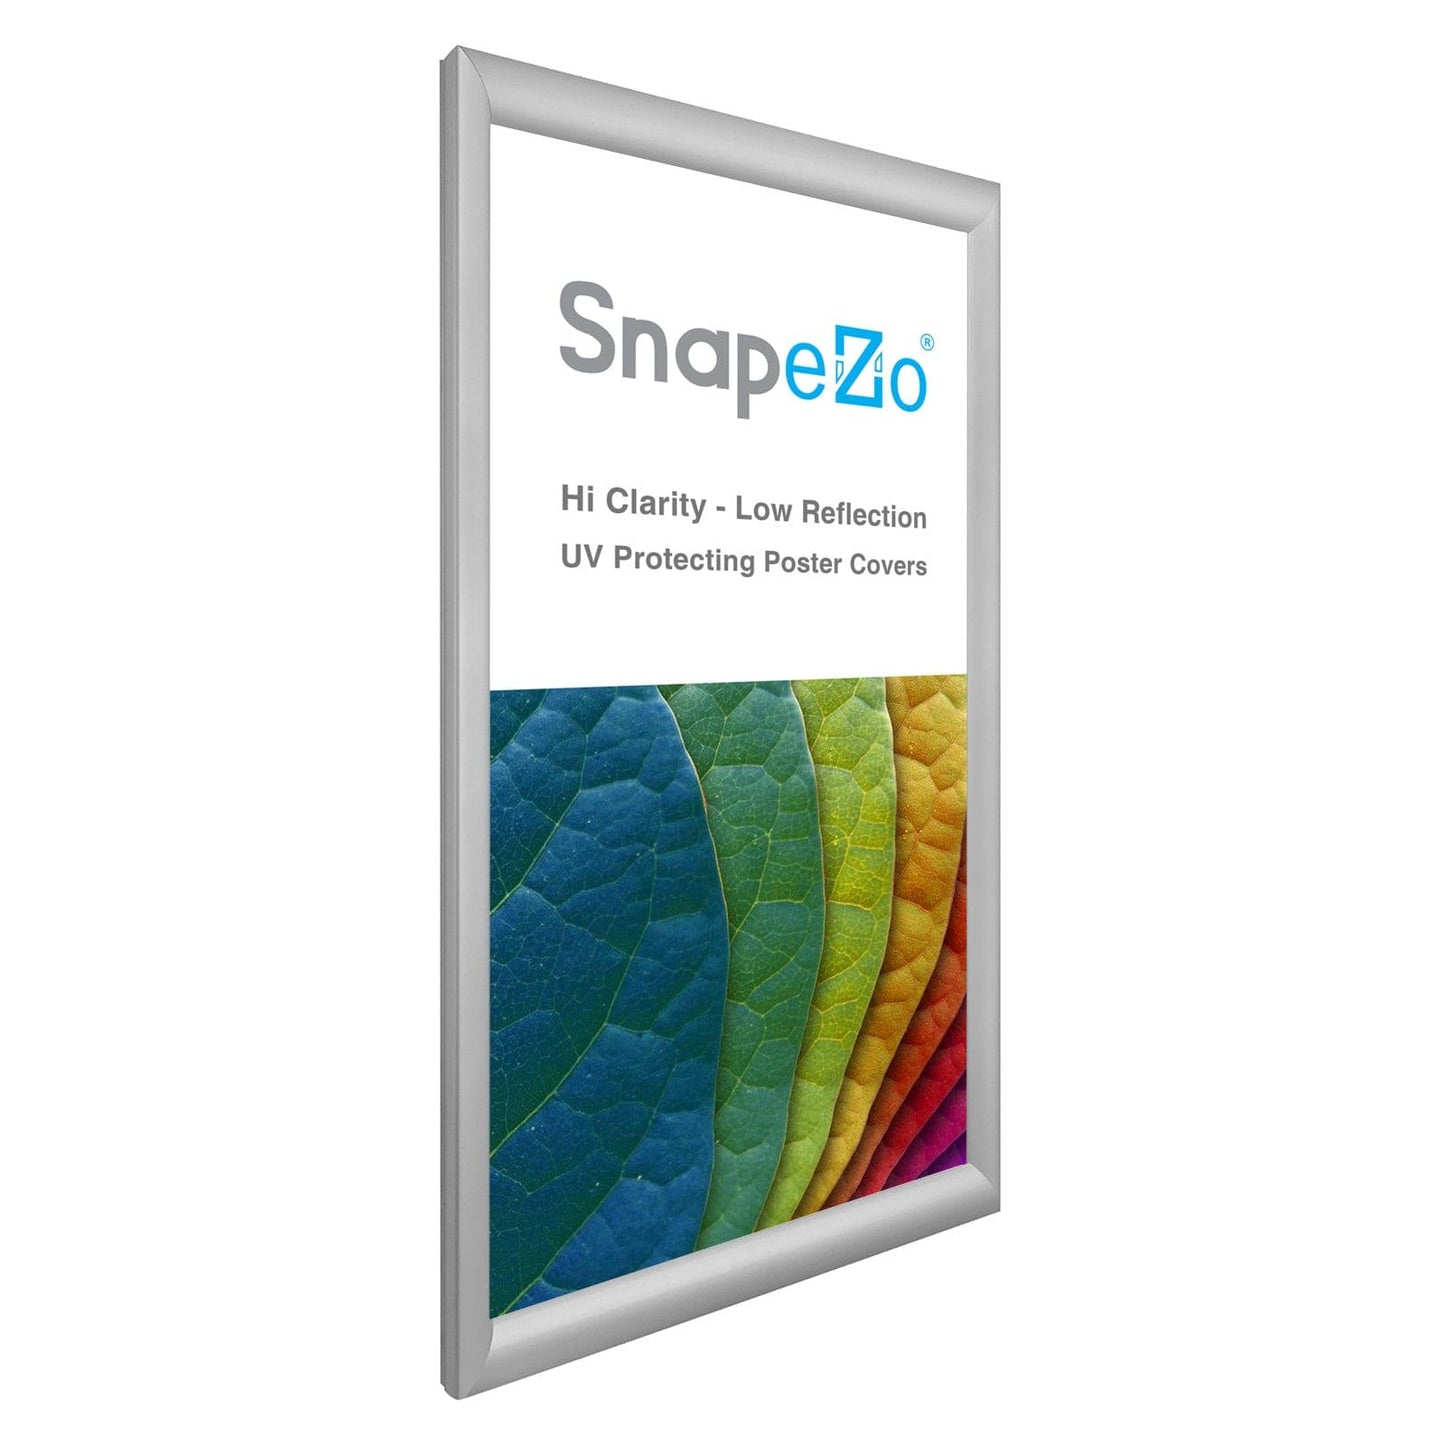 12x24 Silver SnapeZo® Snap Frame - 1.2" Profile - Snap Frames Direct